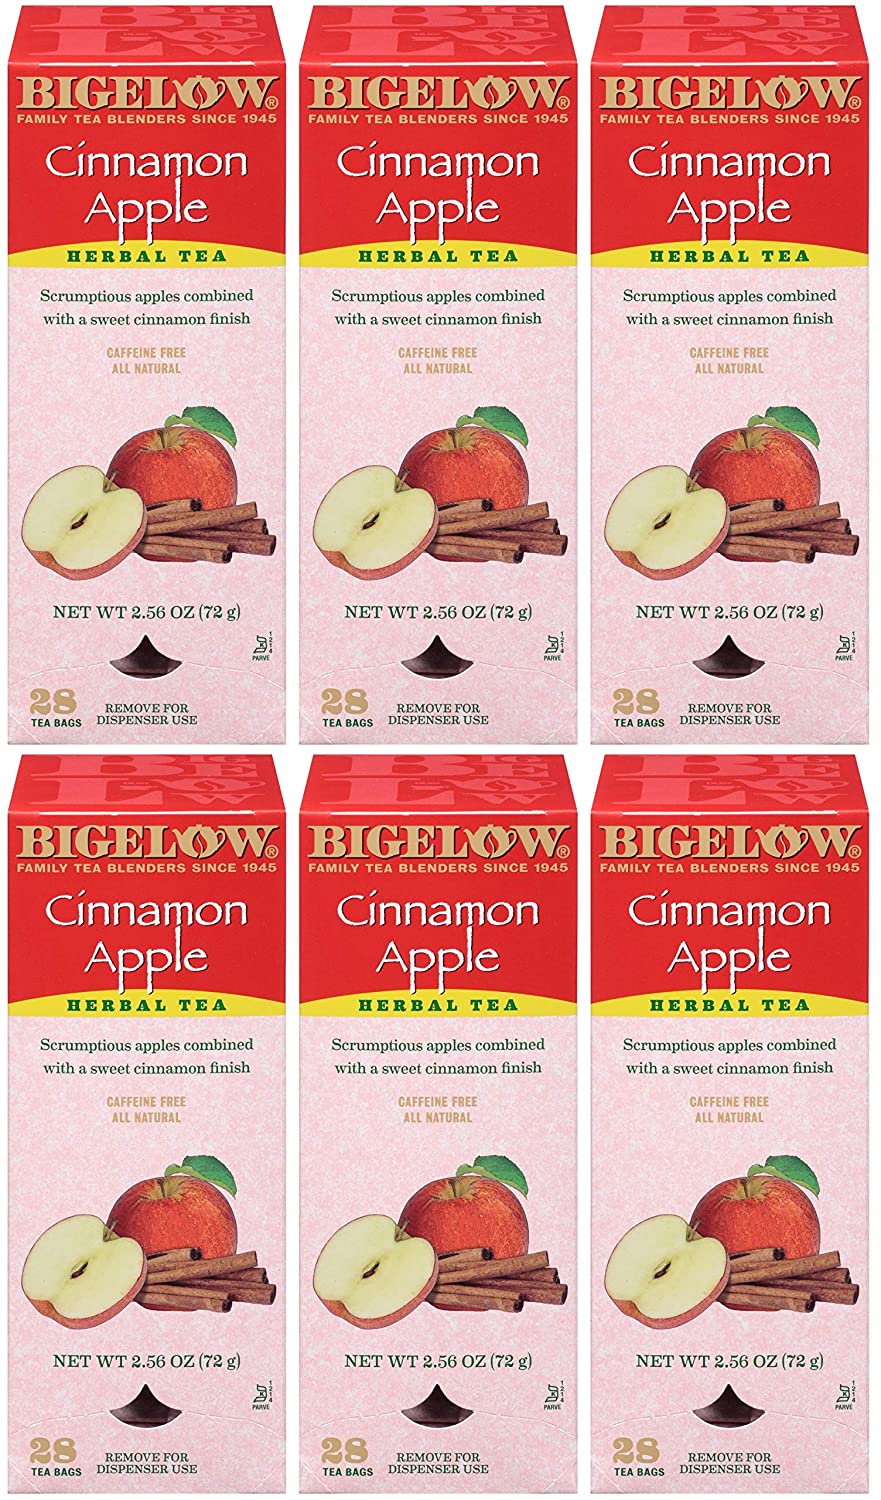 Bigelow Cinnamon Apple Herbal Tea Bags 28-Count Boxes (Pack of 6) Cinnamon Apple Hibiscus Flavored Herbal Tea Bags All Natural Non-GMO